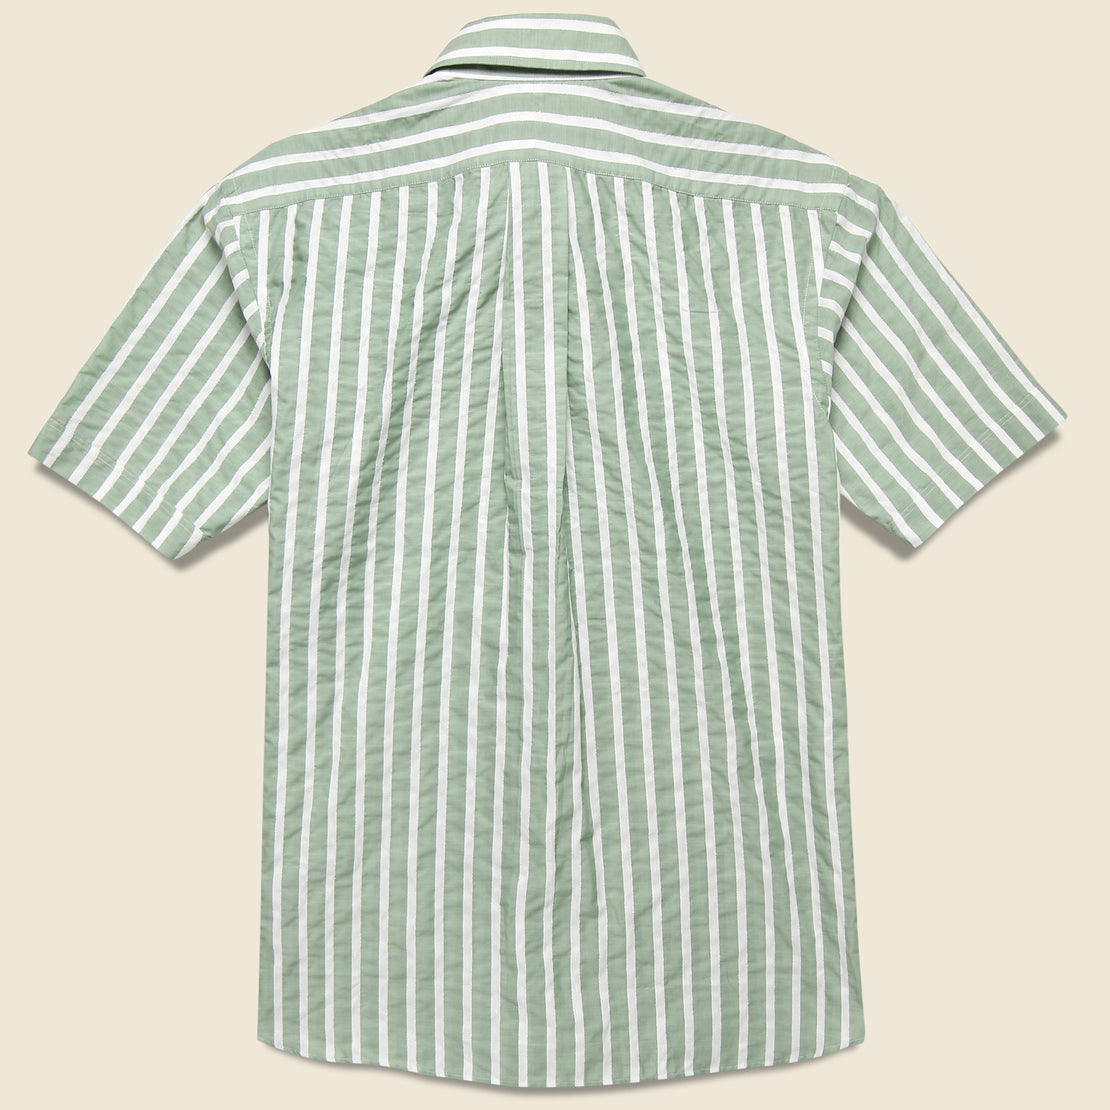 Textured Stripe Shirt - Sage/White - Hamilton Shirt Co. - STAG Provisions - Tops - S/S Woven - Stripe